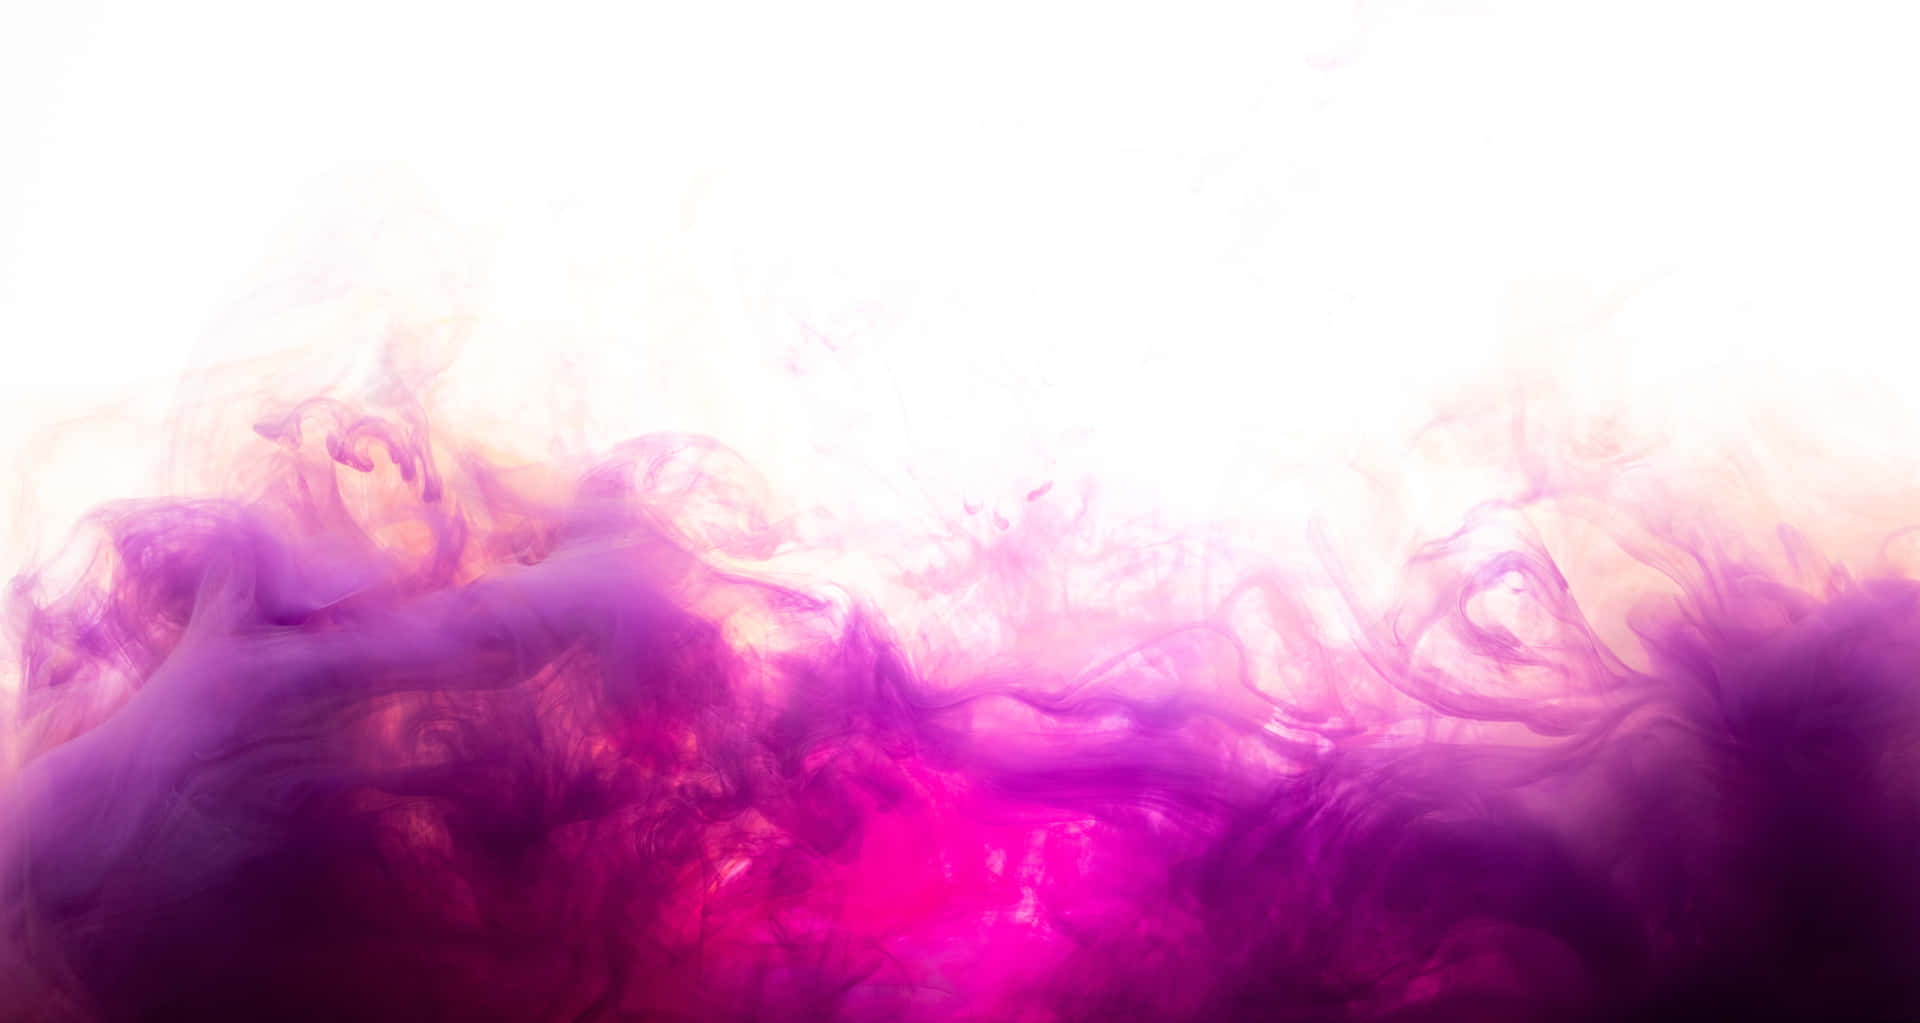 A beautiful, awe-inspiring dreamscape of deep purple hues